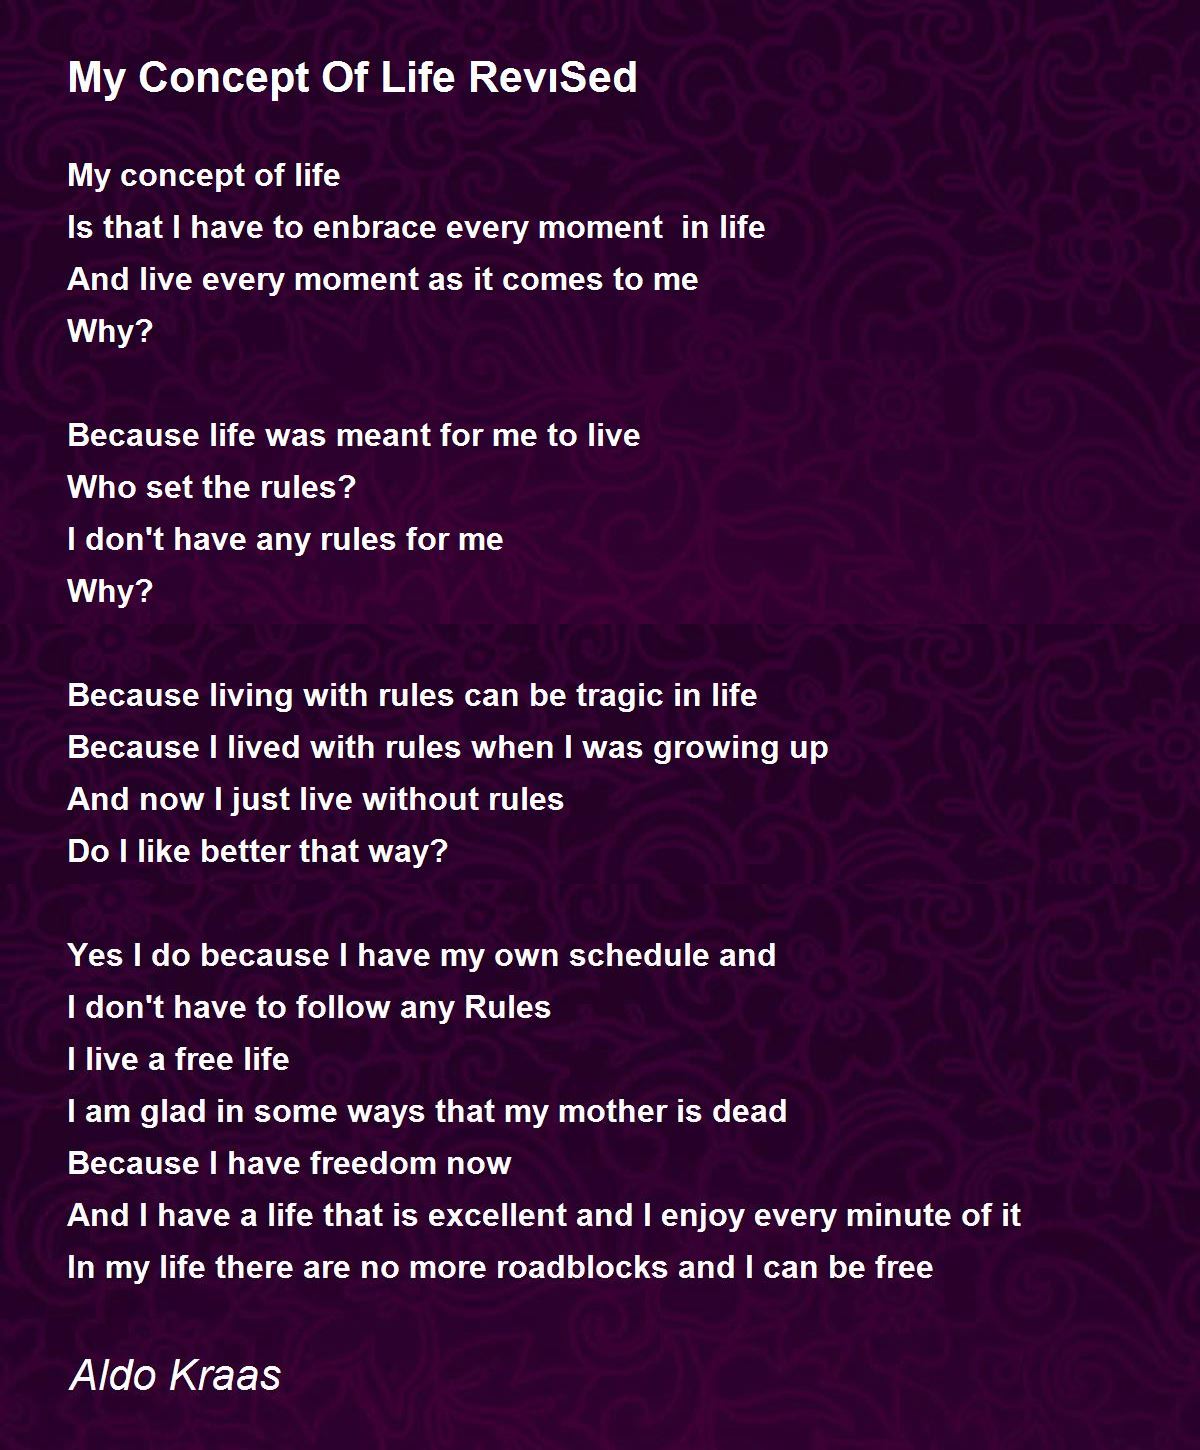 My Concept Of Life RevıSed - My Concept Of Life RevıSed Poem by Aldo Kraas